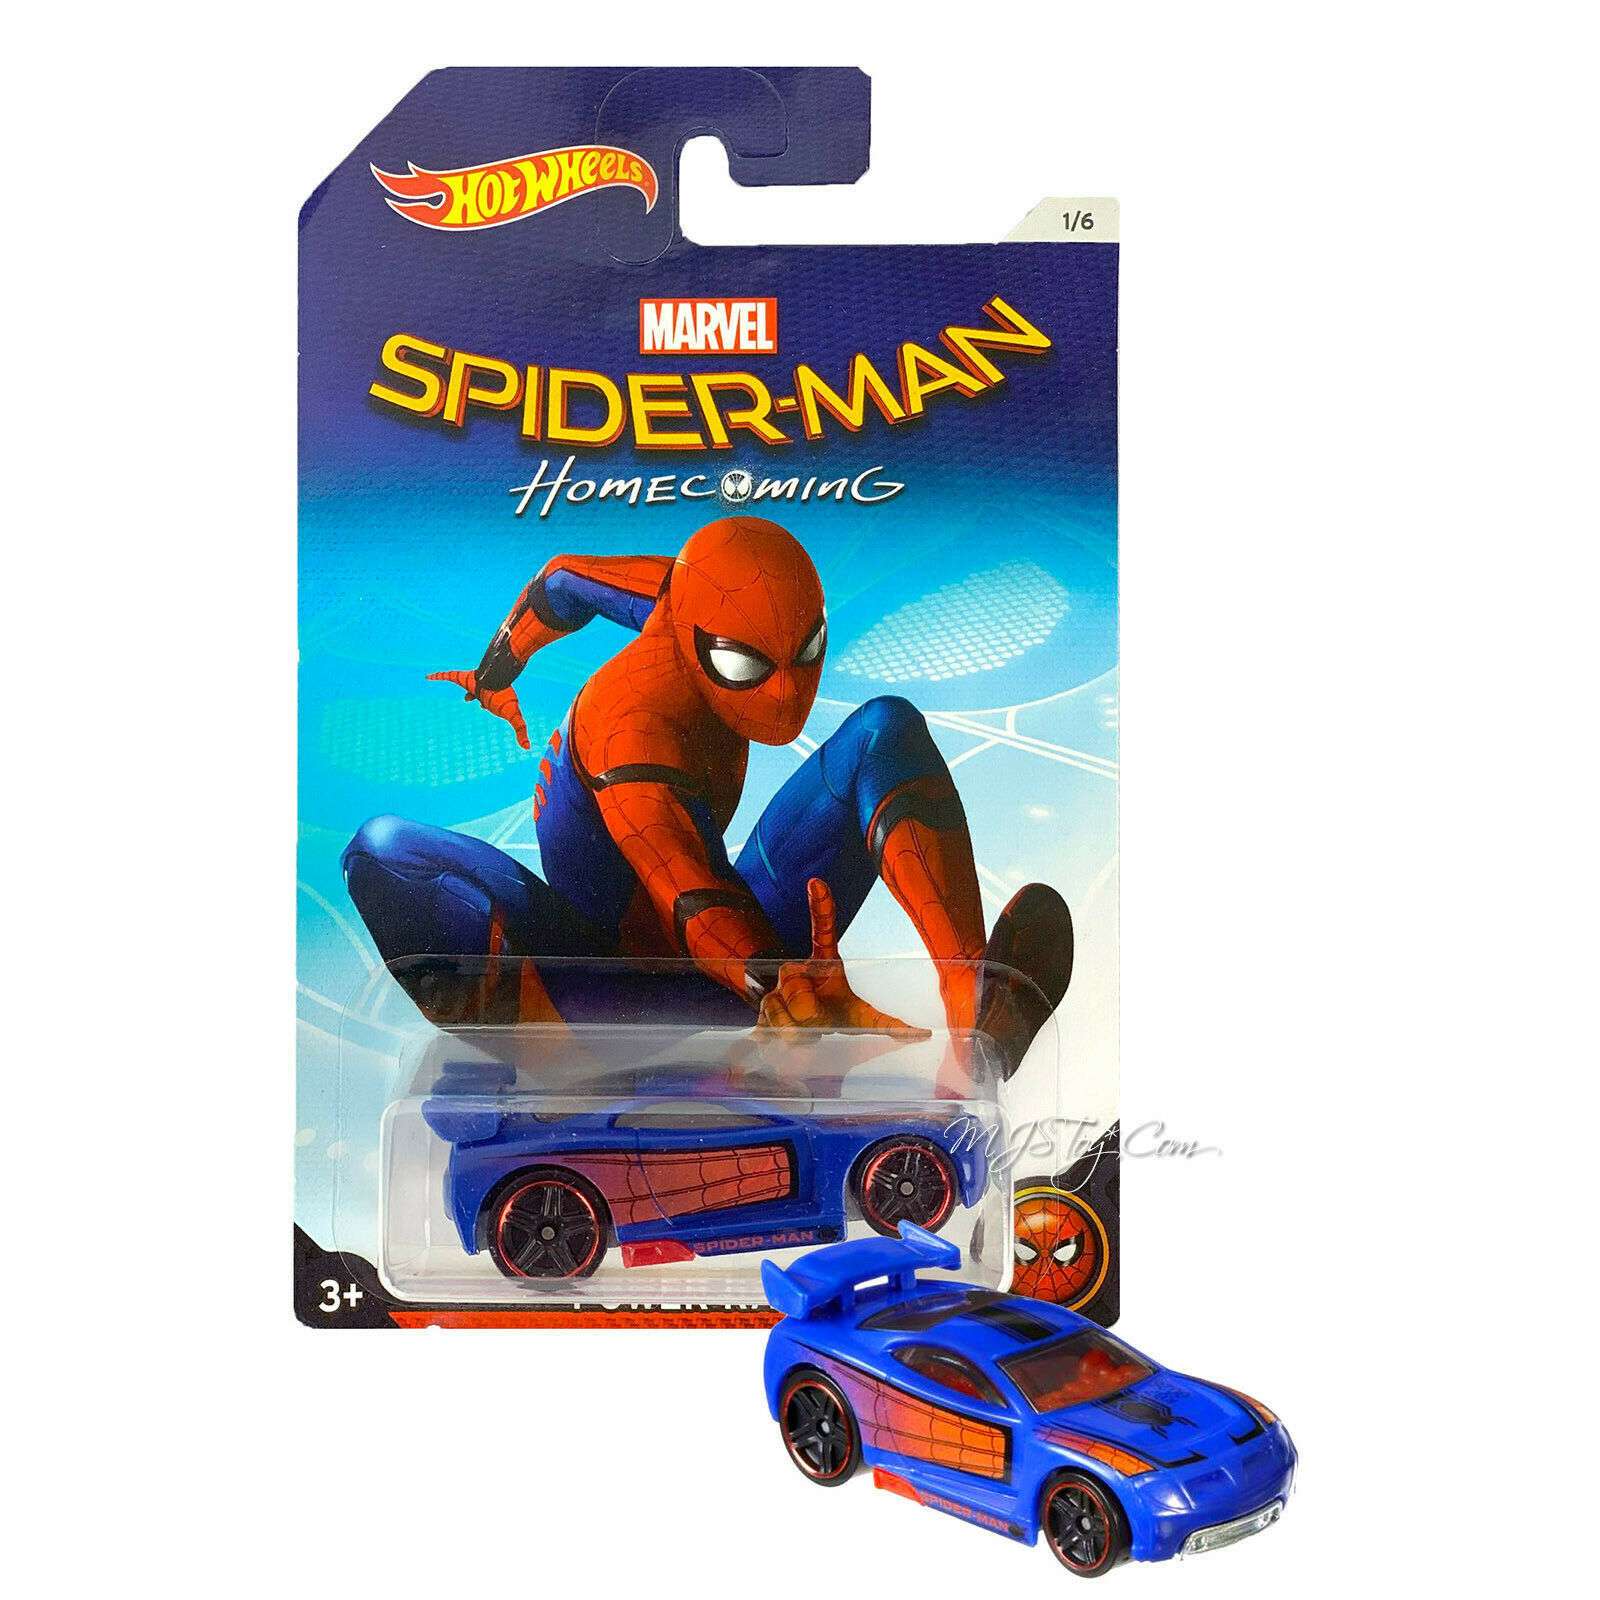 Year 2016 Hot Wheels Spider-Man 1:64 Die Cast Car 1/6 - Homecoming POWER RAGE - $14.99